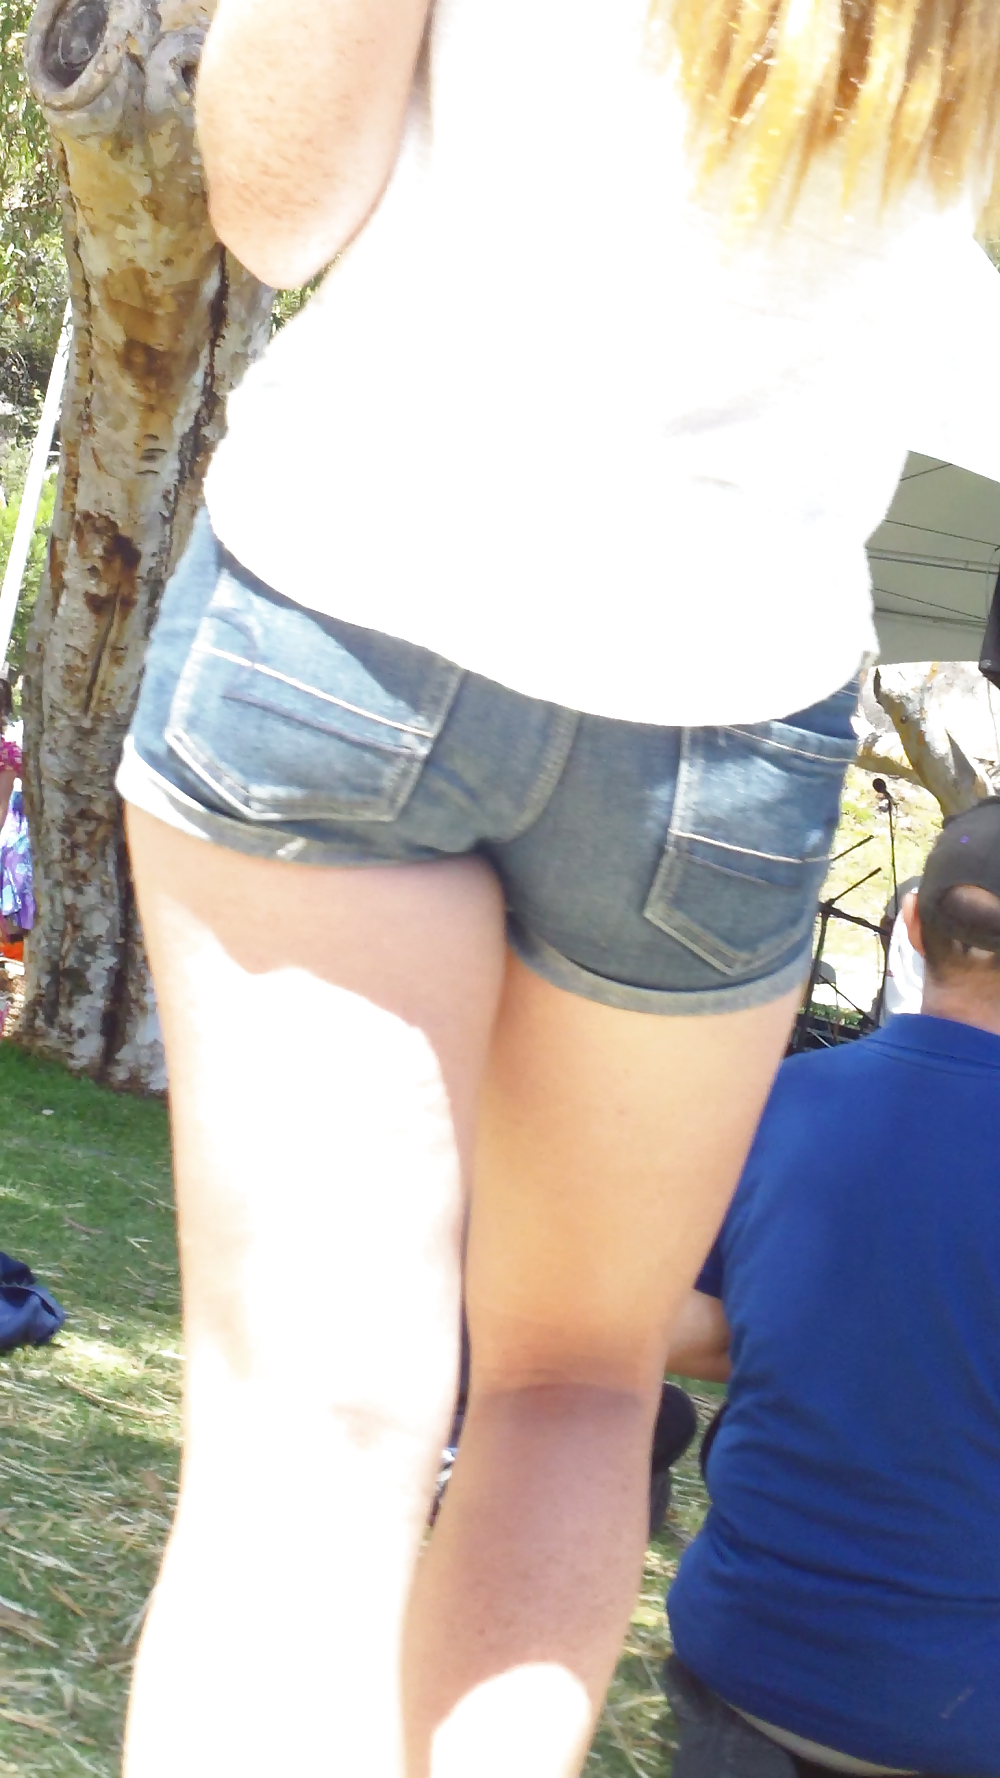 Some nice public butt cracks & ass cheeks in shorts  #21359141